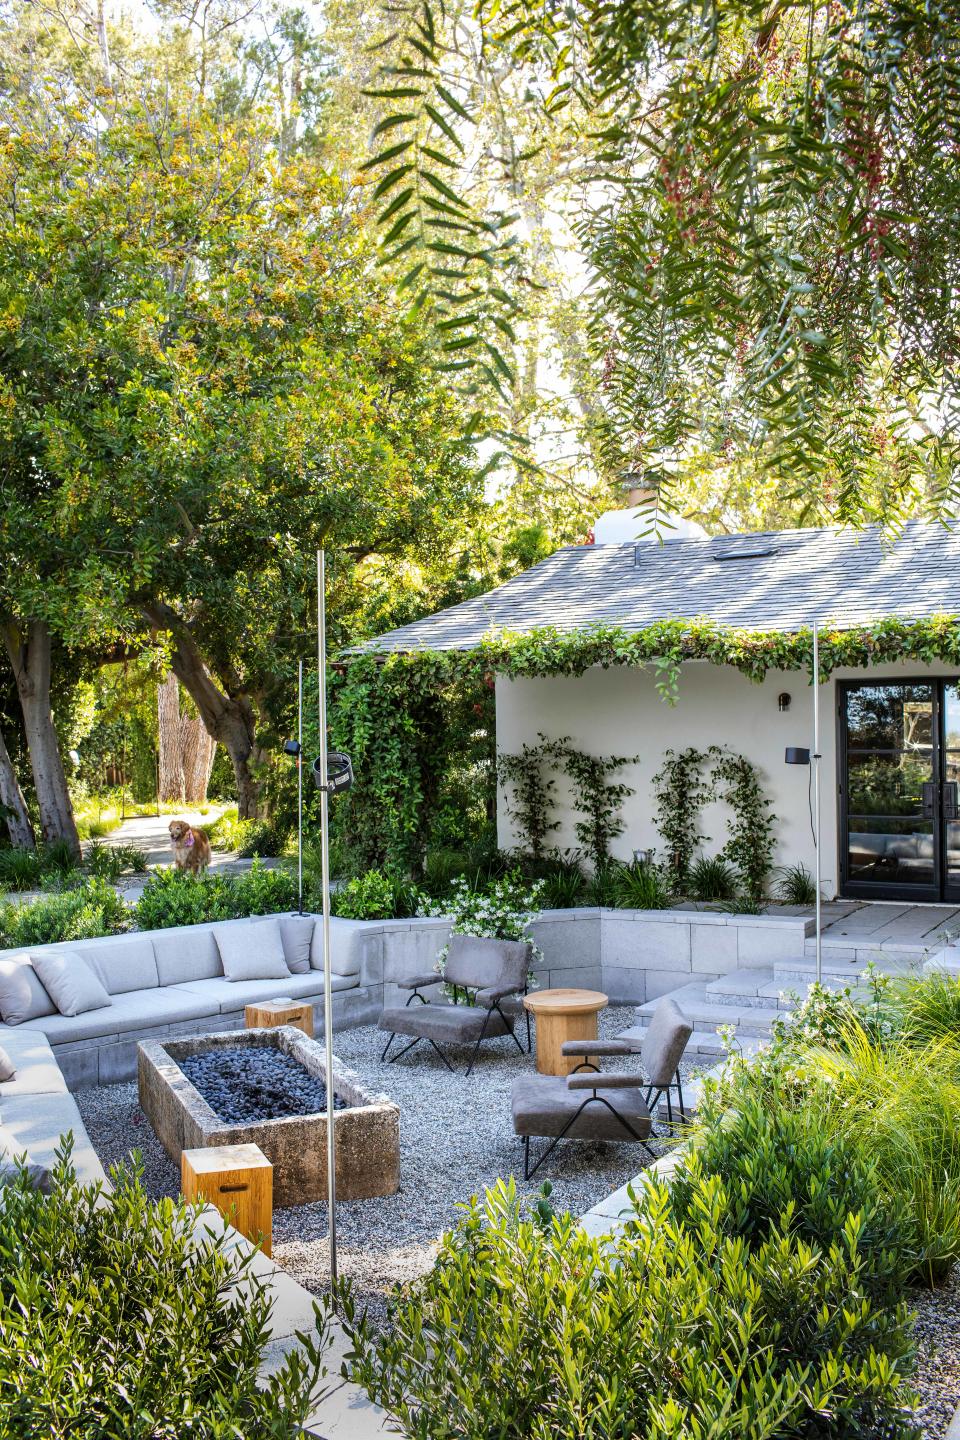 Sunken conversation pit designed by Mark Rios in Adam Levine and Behati Prinsloo’s backyard.